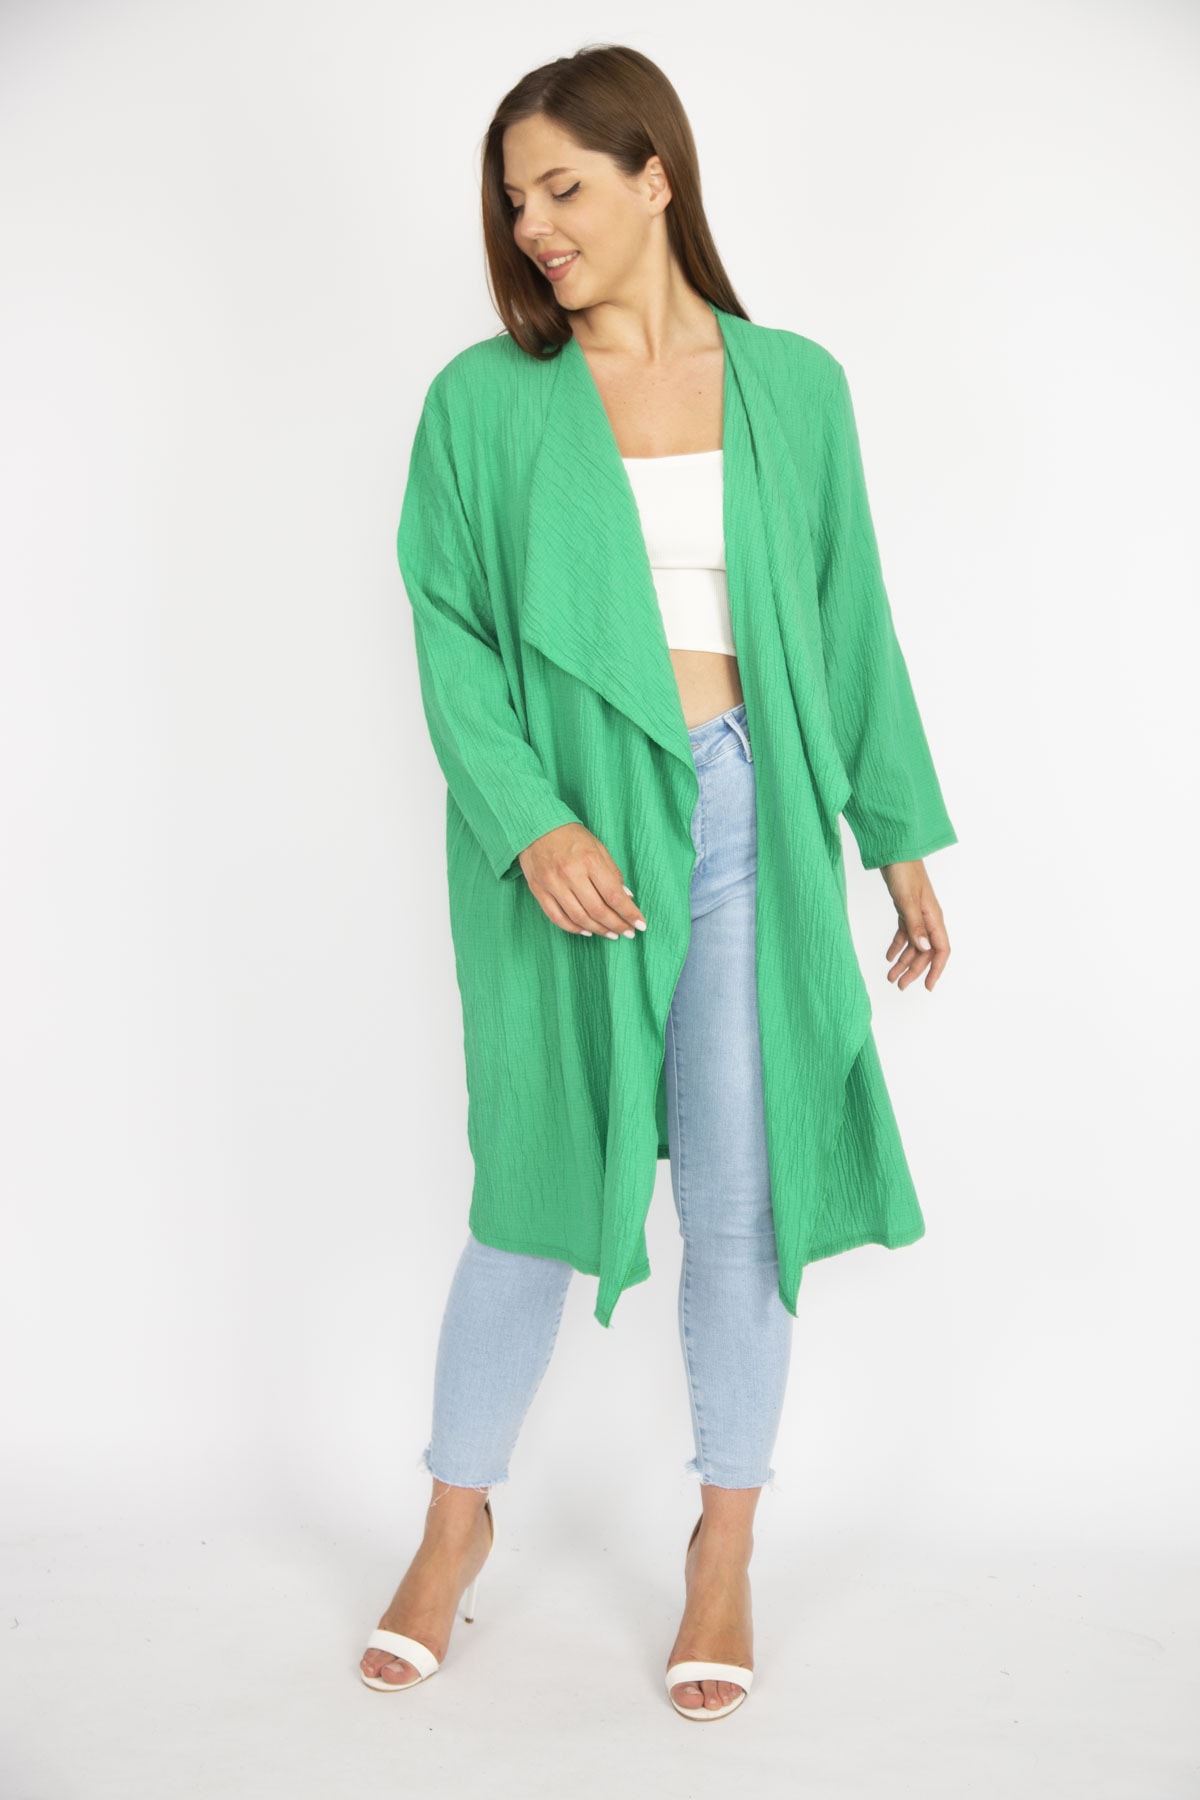 Şans Women's Green Plus Size Turndown Collar Cardigan